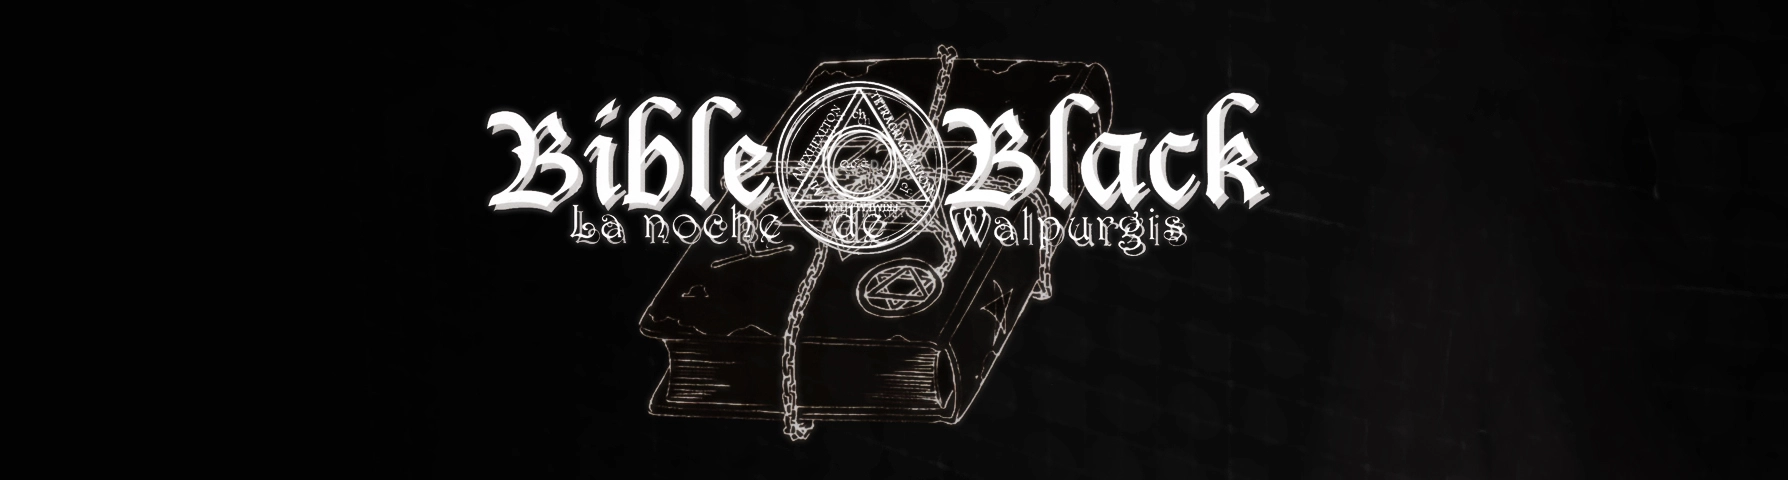 Bible Black -La Noche de Walpurgis- main image